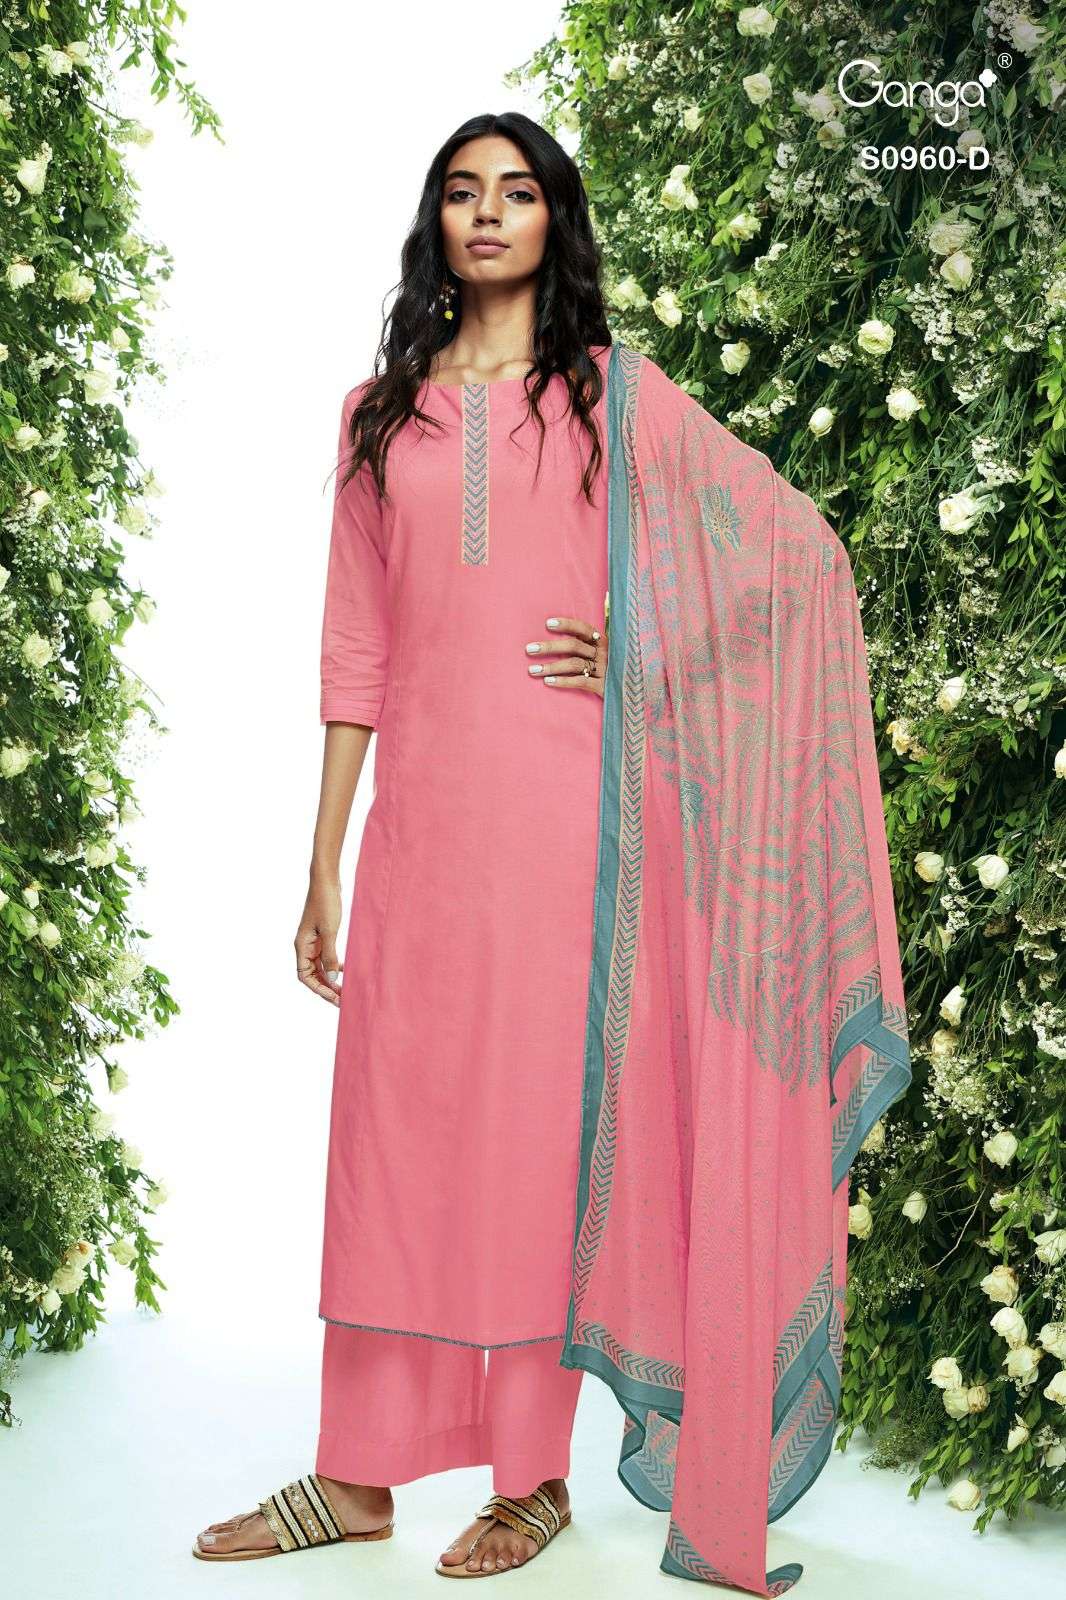 ganga heny 960 series premium cotton designer salwar suits wholesale price surat